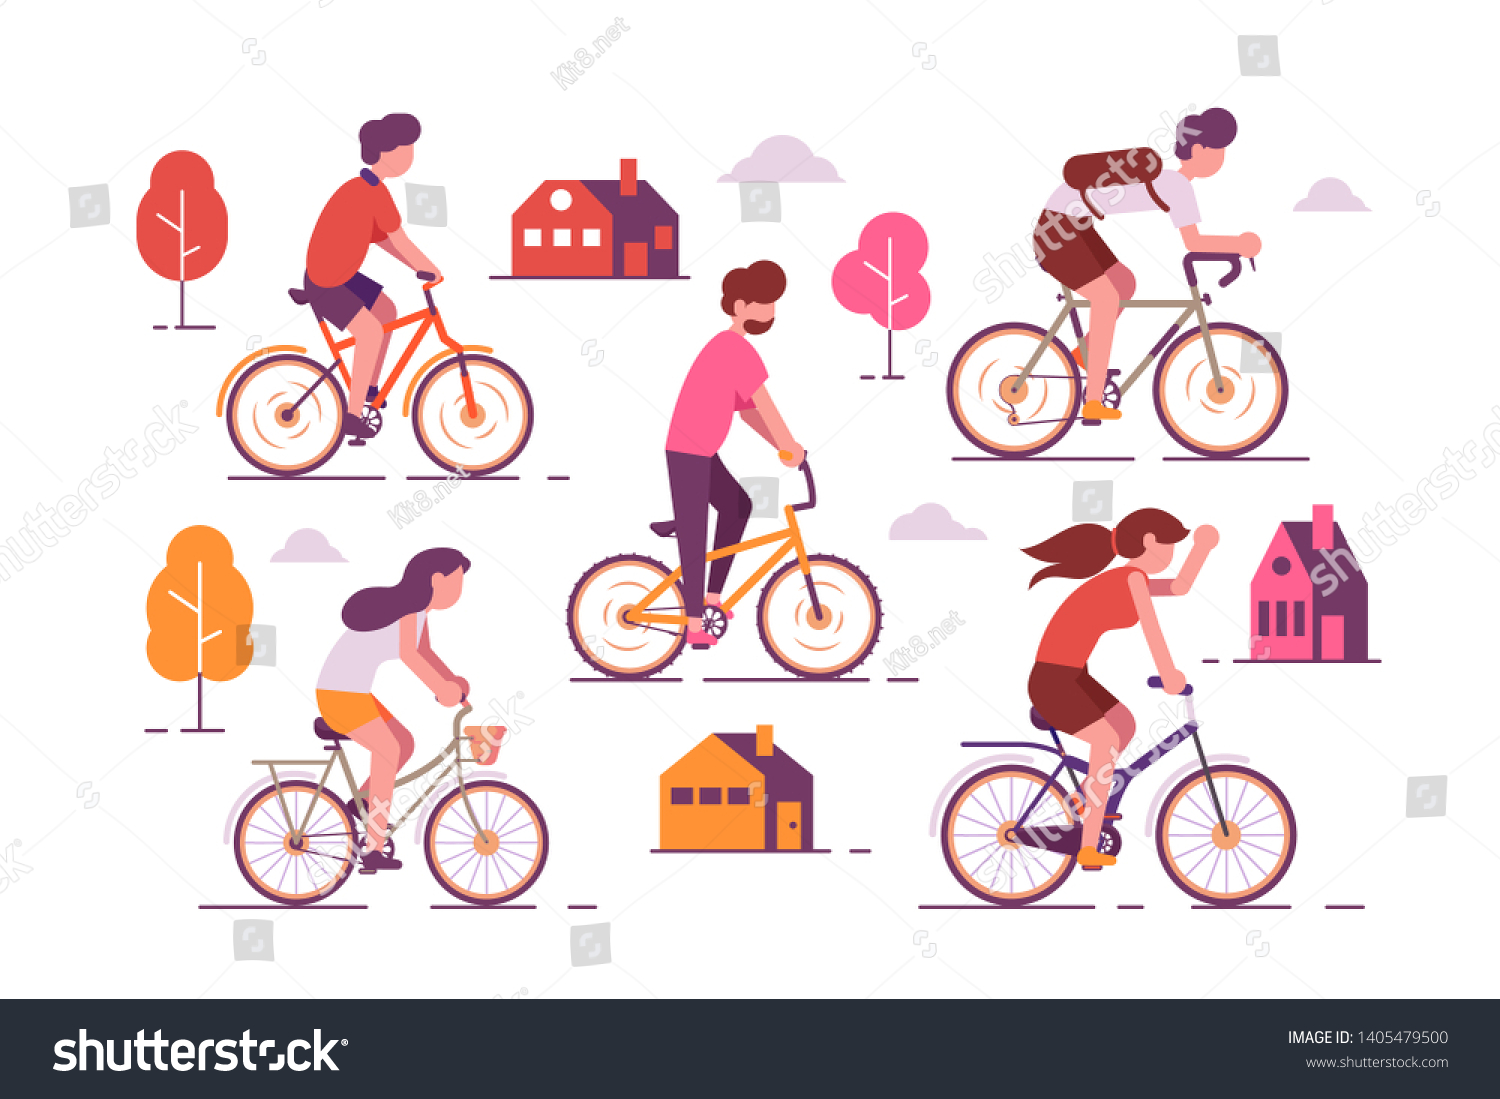 types of bike riding